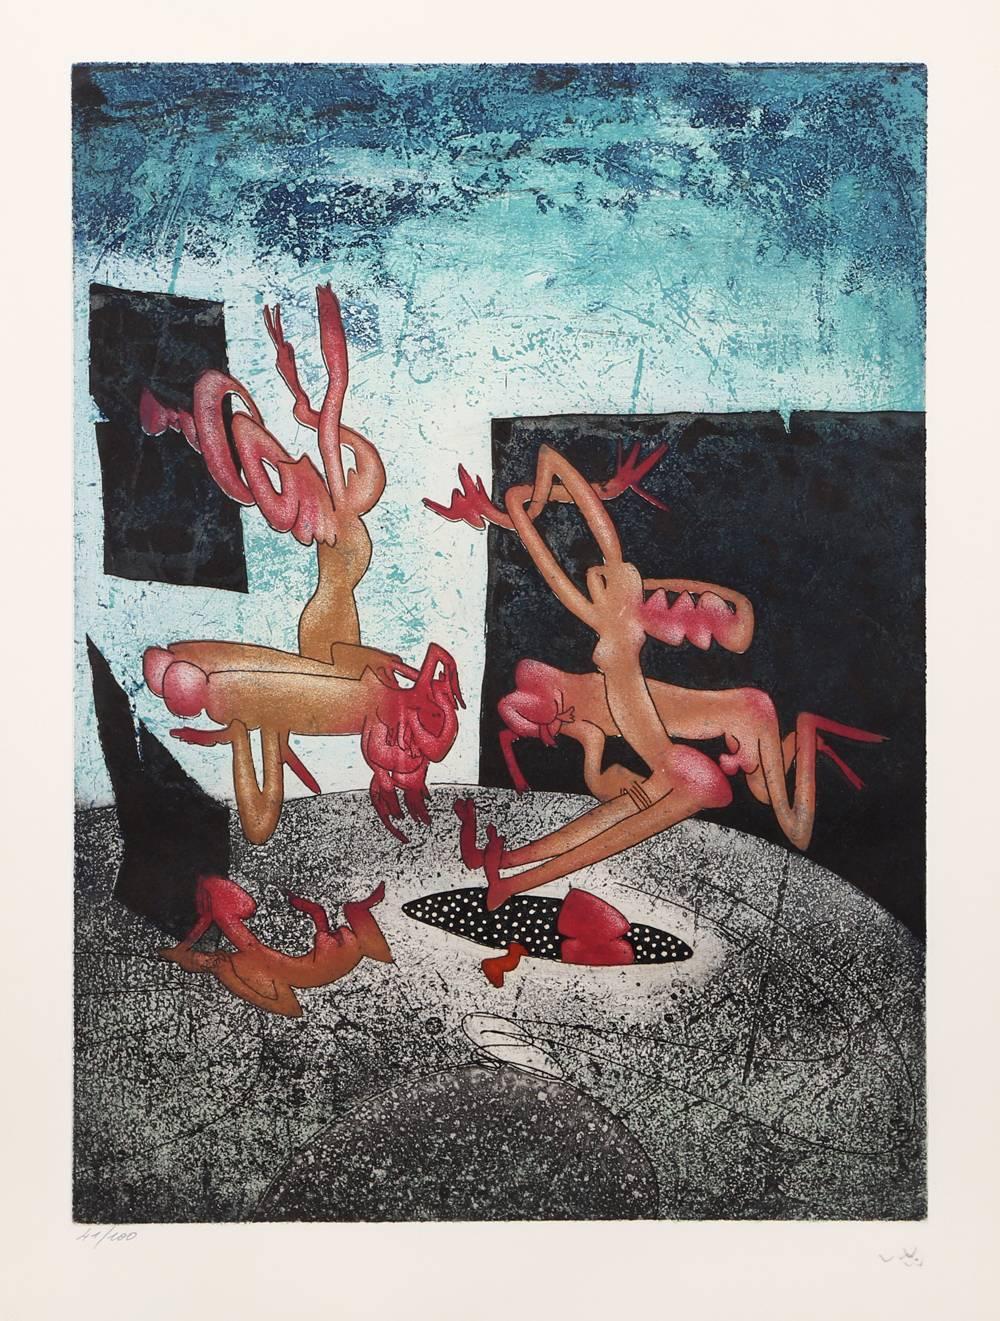 La Danse de la Mort, Suite of 8 Aquatint Etchings by Matta - Surrealist Print by Roberto Matta